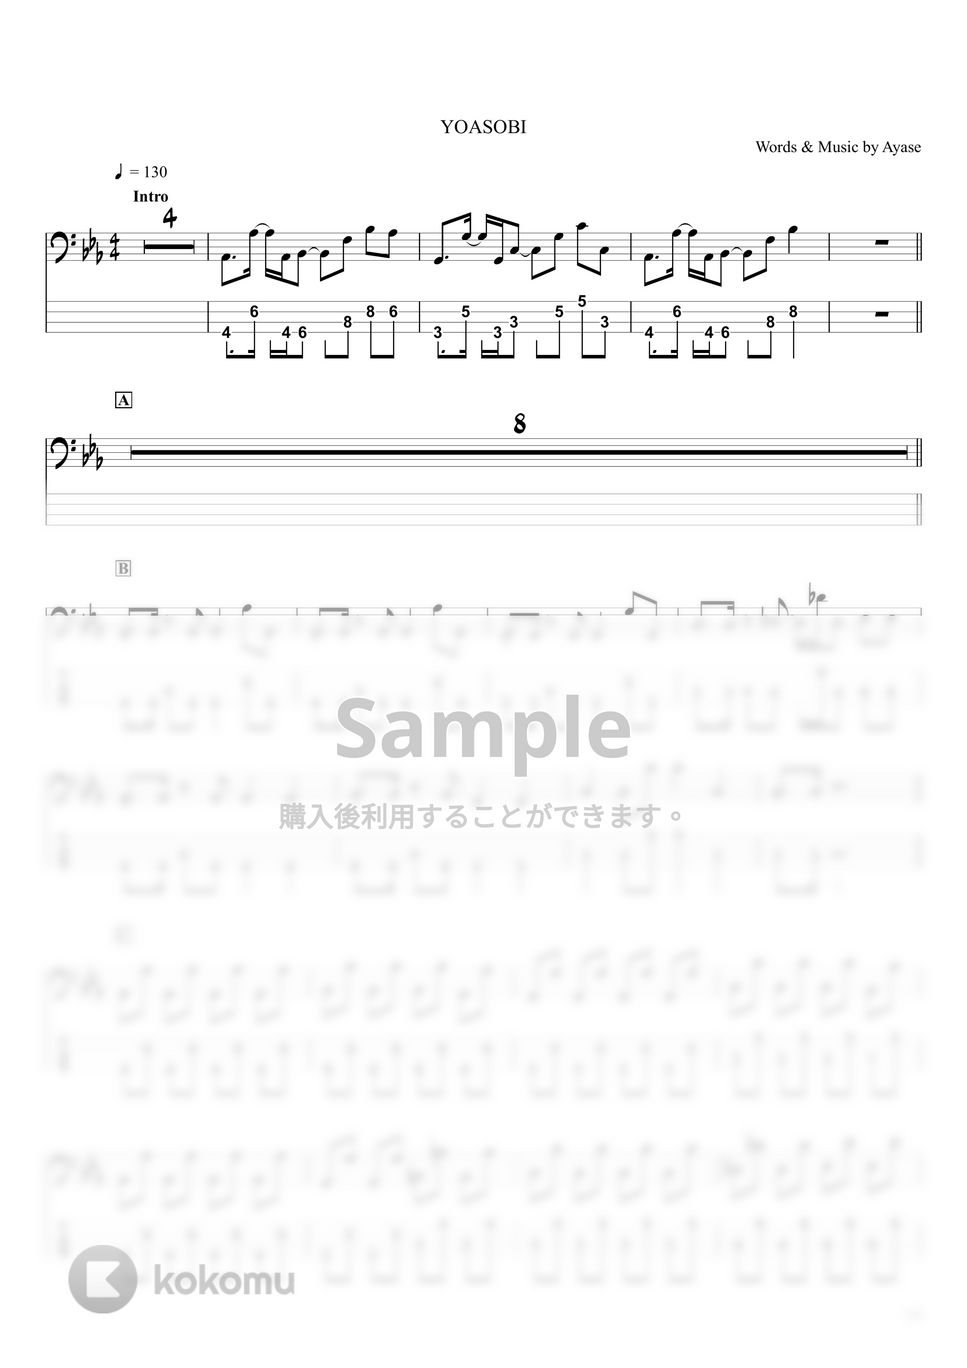 YOASOBI - ハルジオン (ベースTAB譜 / ☆4弦ベース対応) by swbass